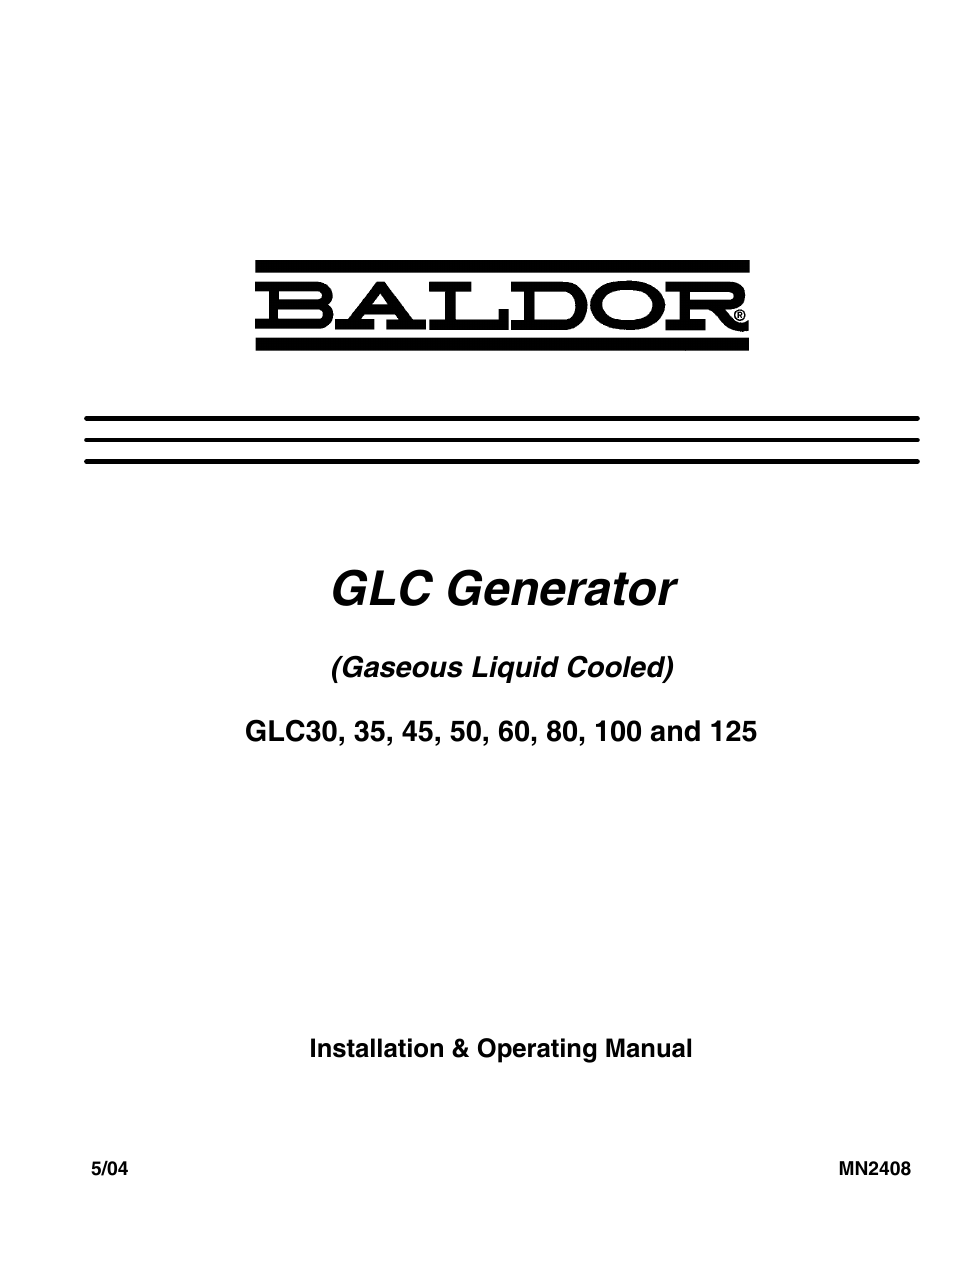 GLC GENERATOR GLC30